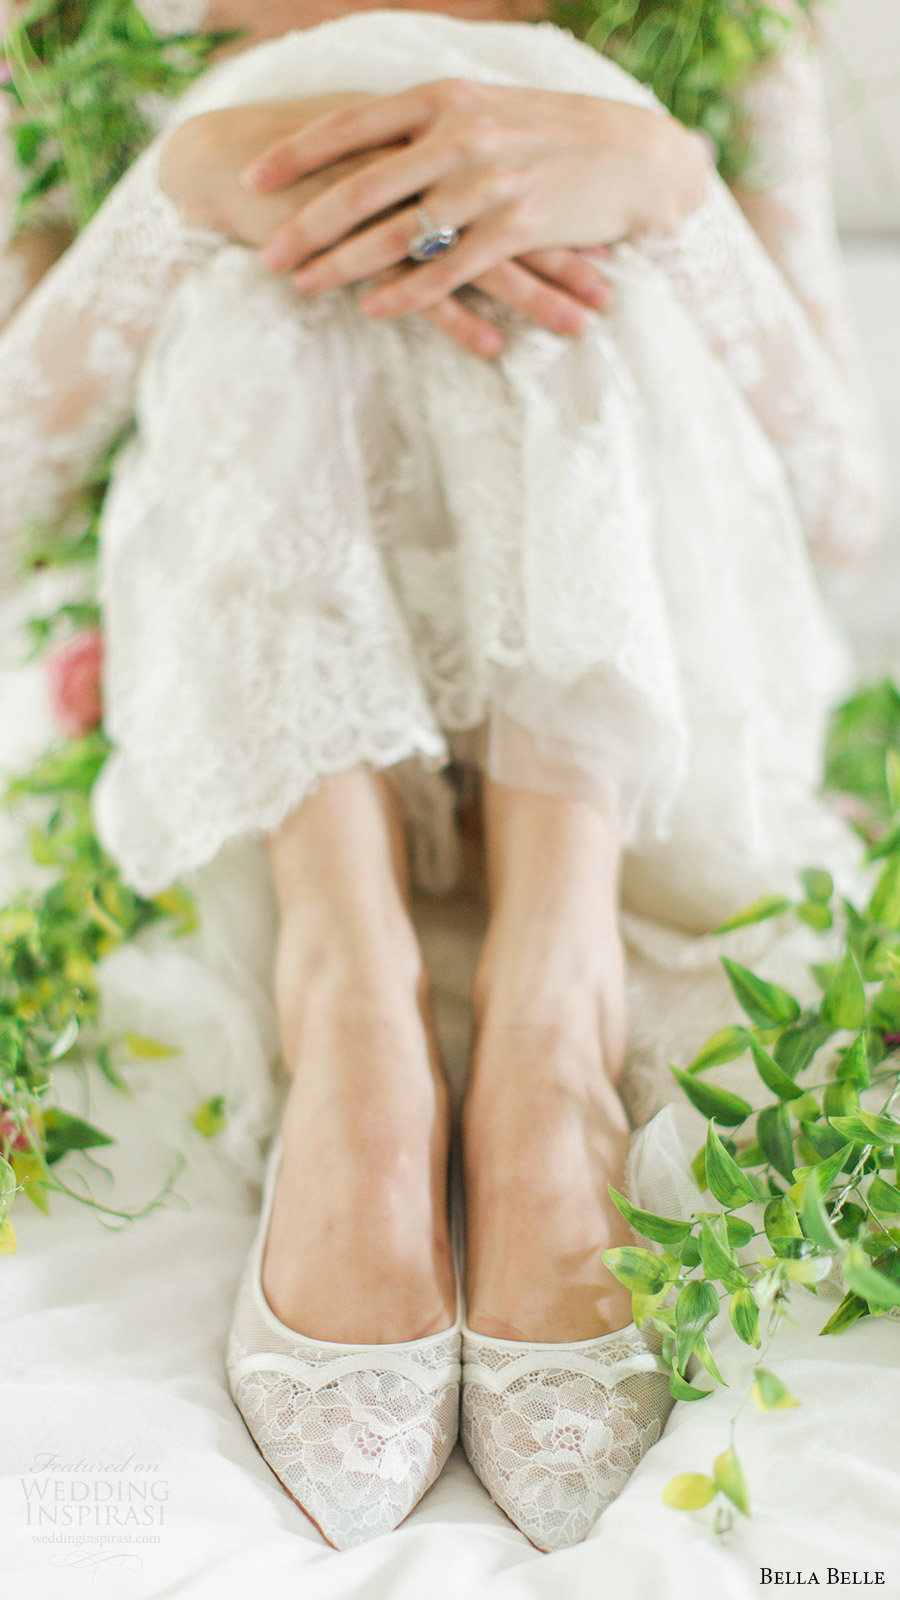 bella belle bridal shoes 2016 sophie scalloped chantily lace flat wedding shoes 